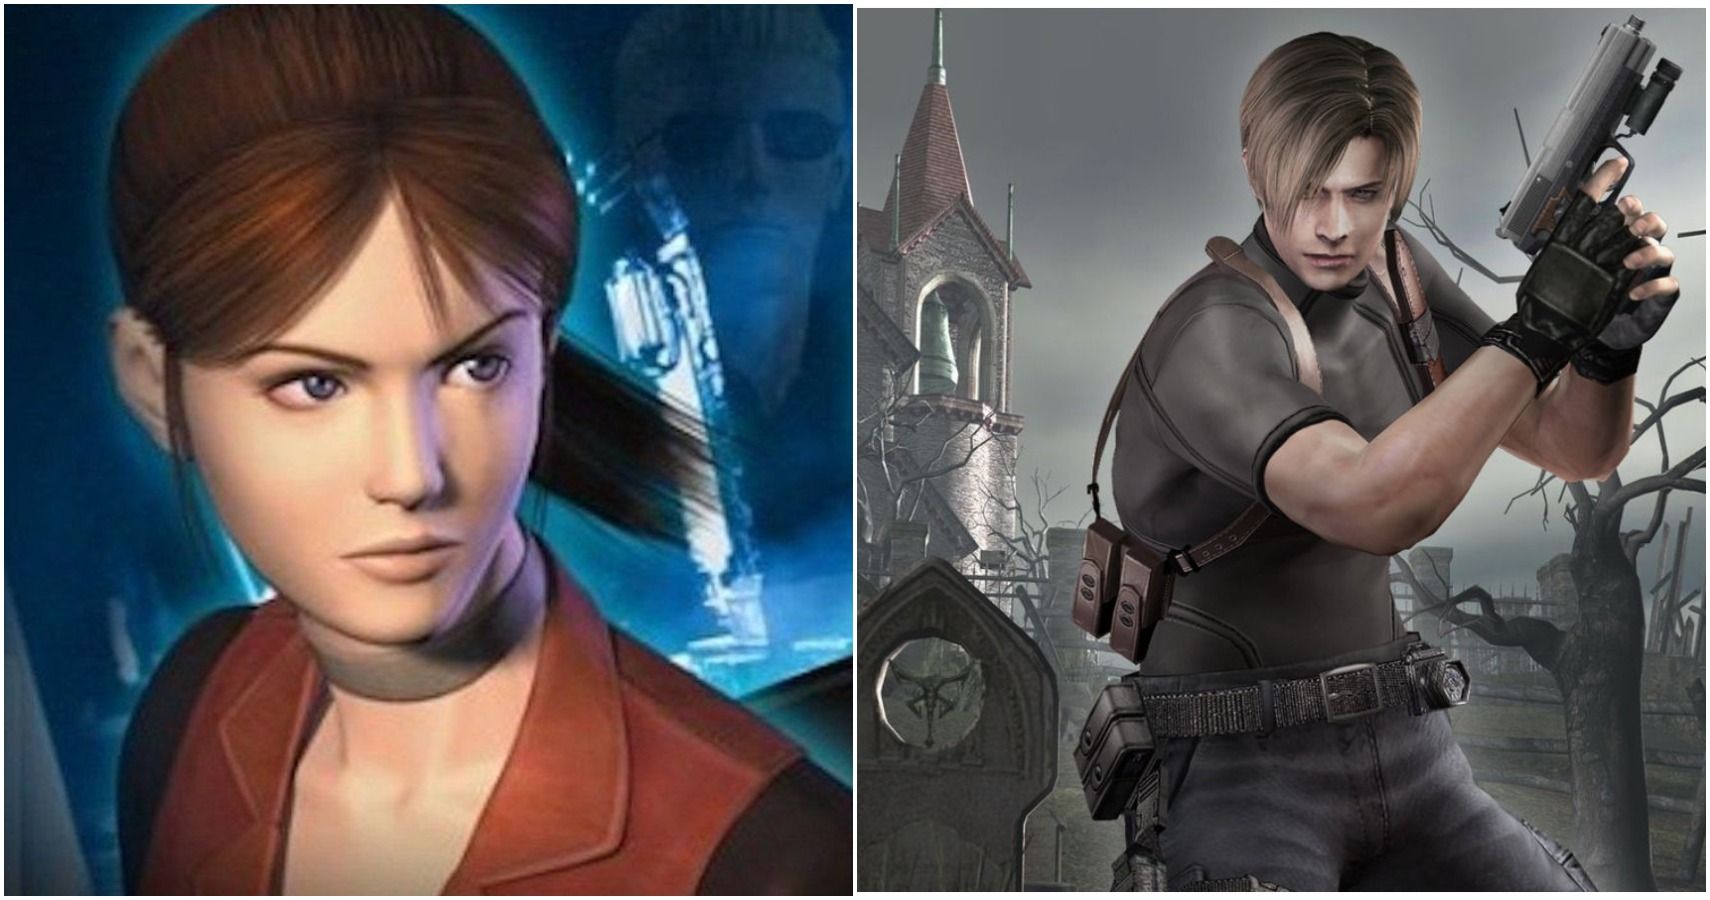 Next Resident Evil Remake: RE4 vs. Code Veronica